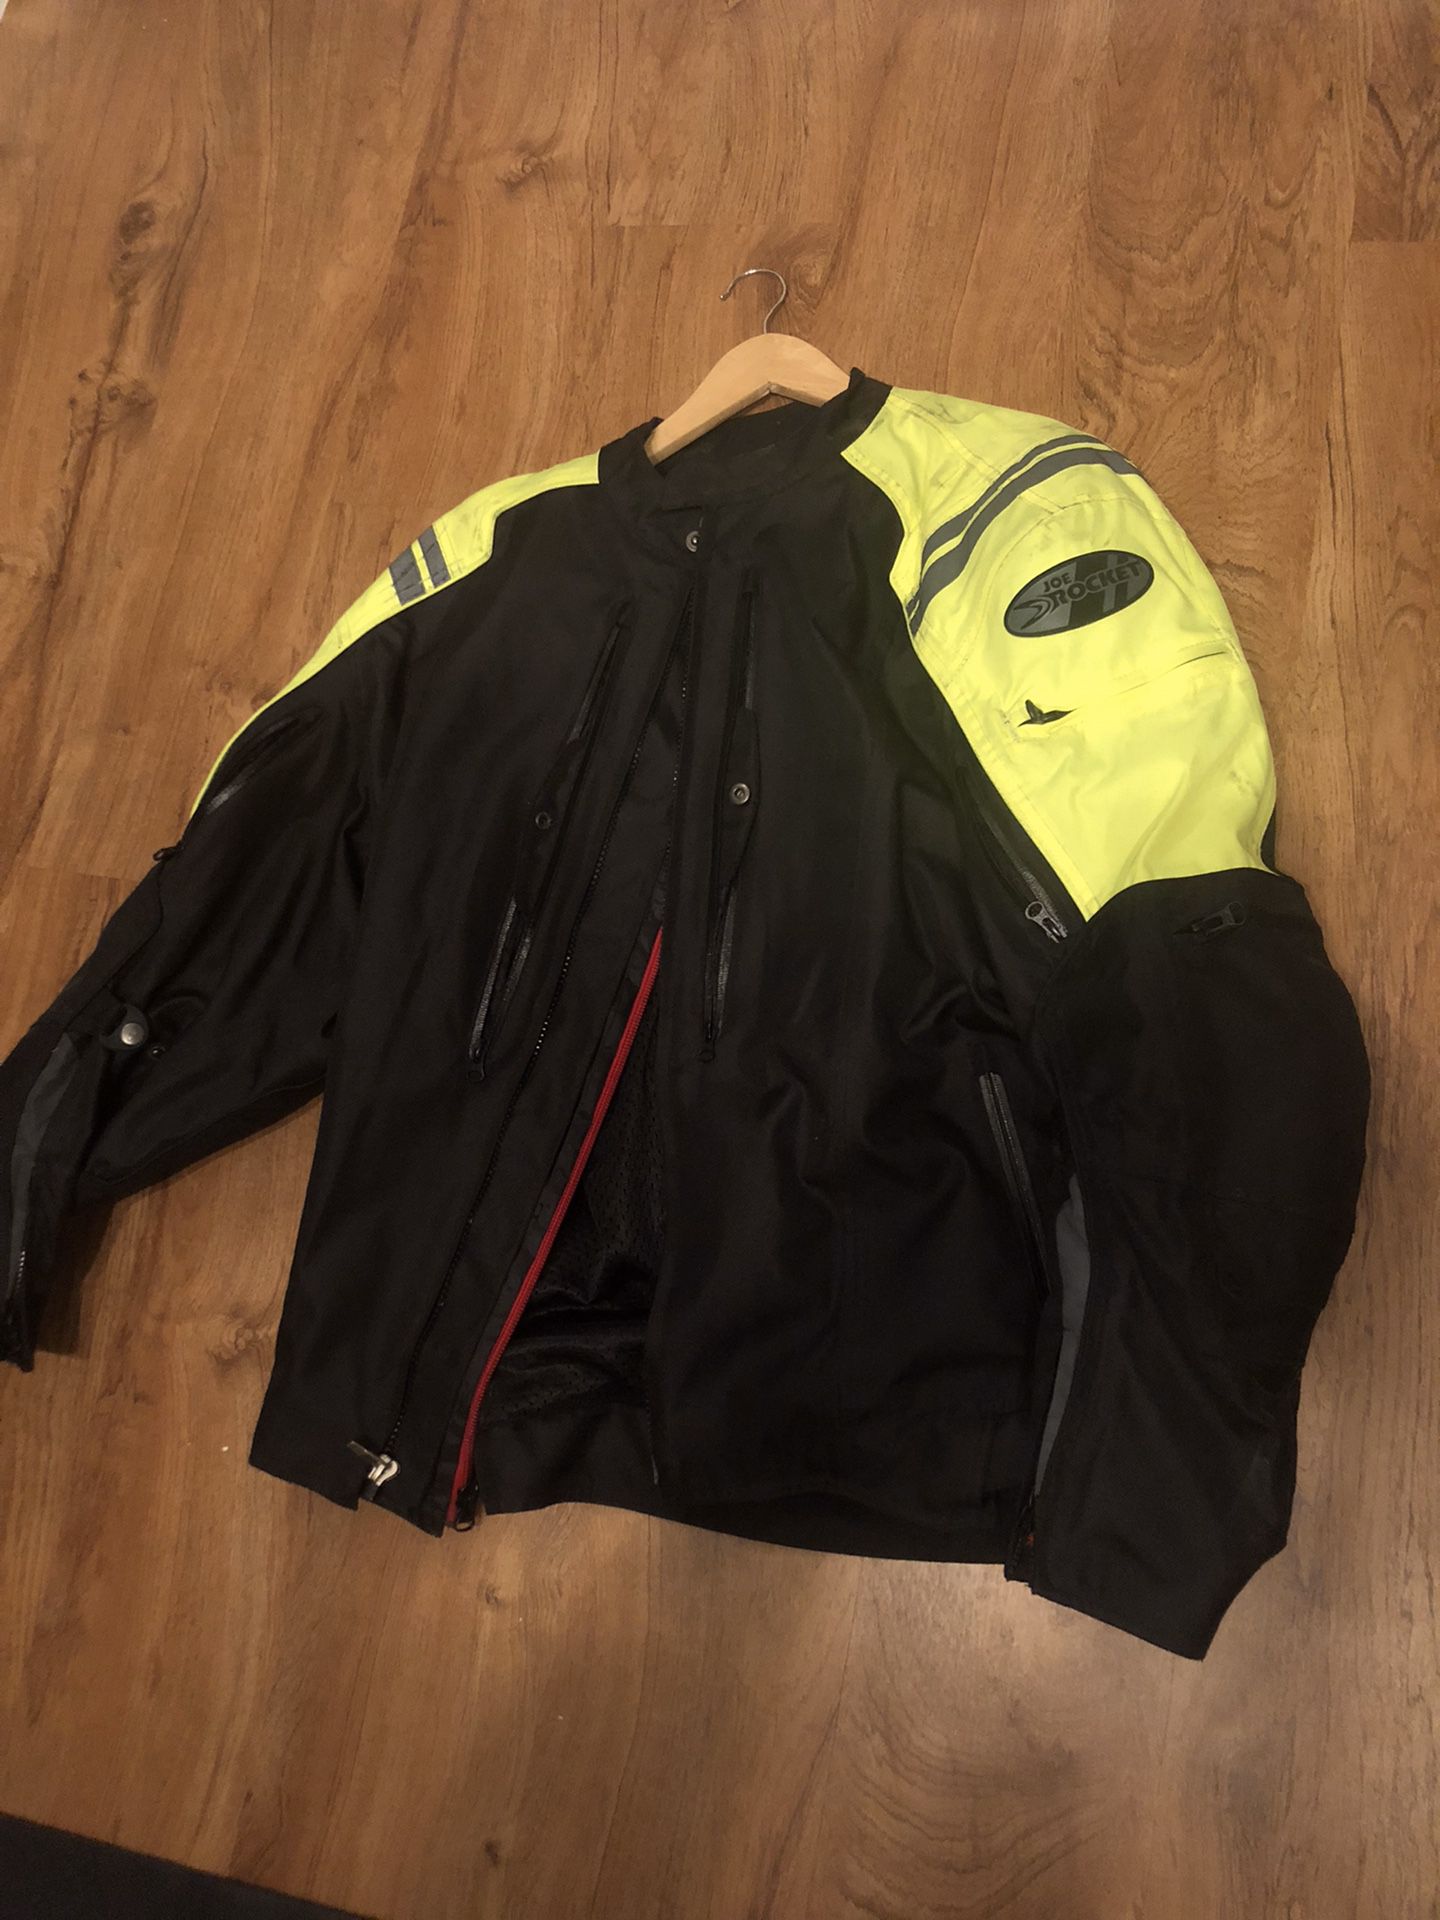 Joe Rocket motorcycle jacket with pads